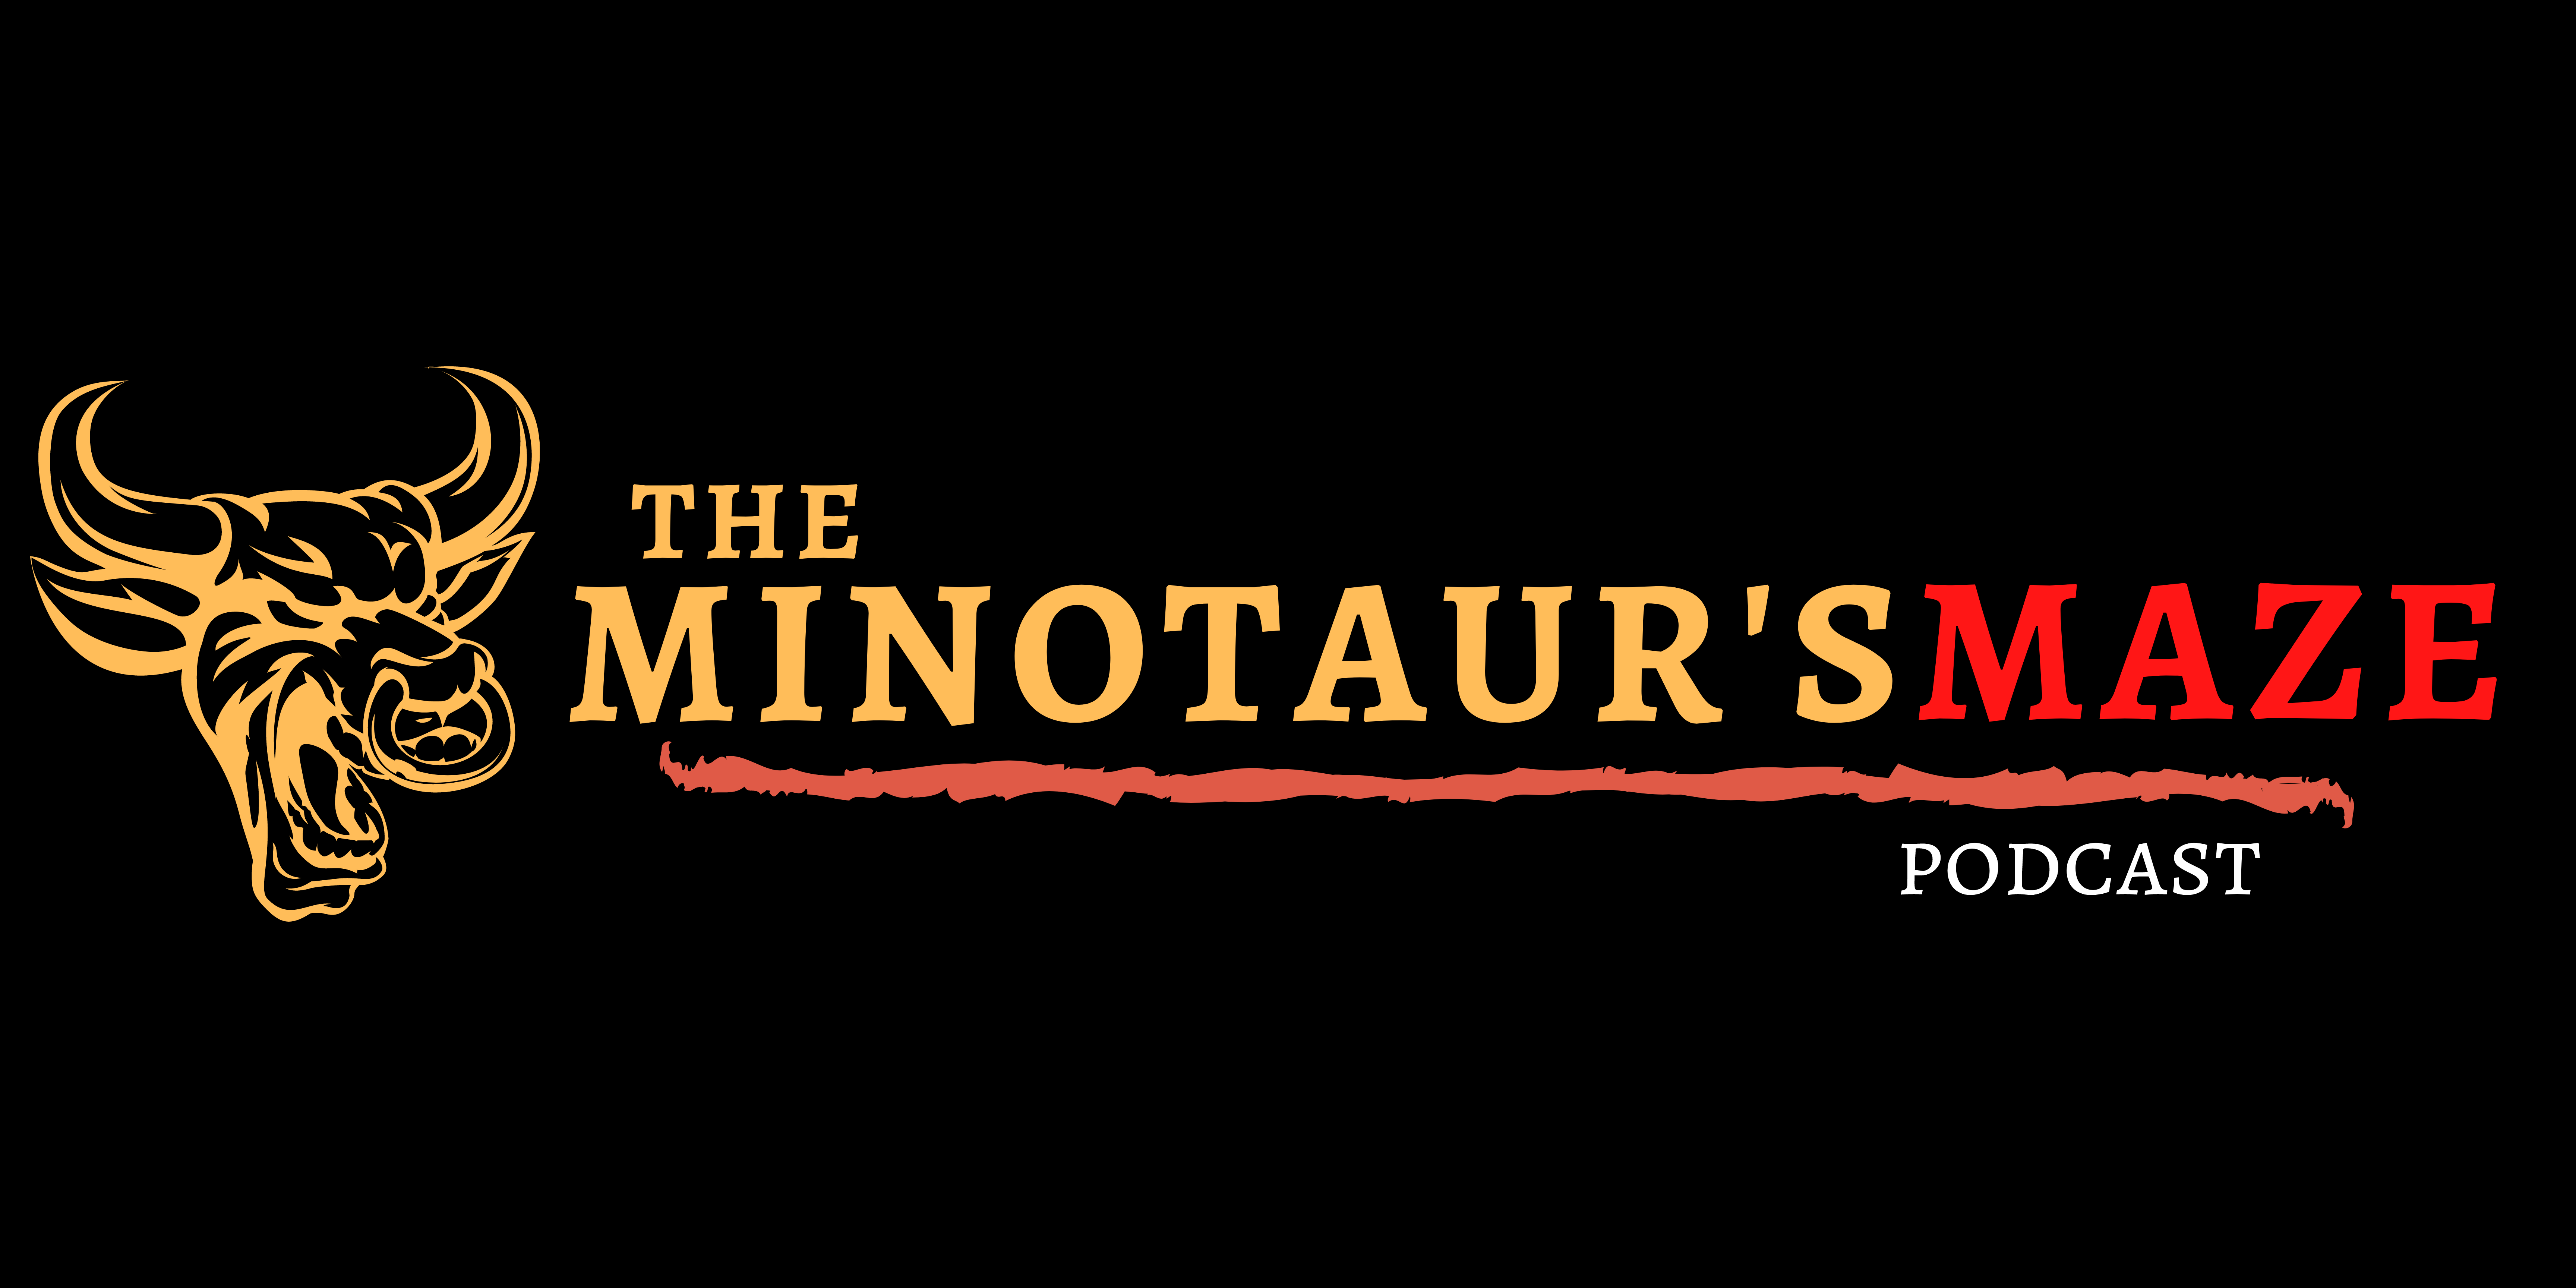 The Minotaur's Maze Podcast